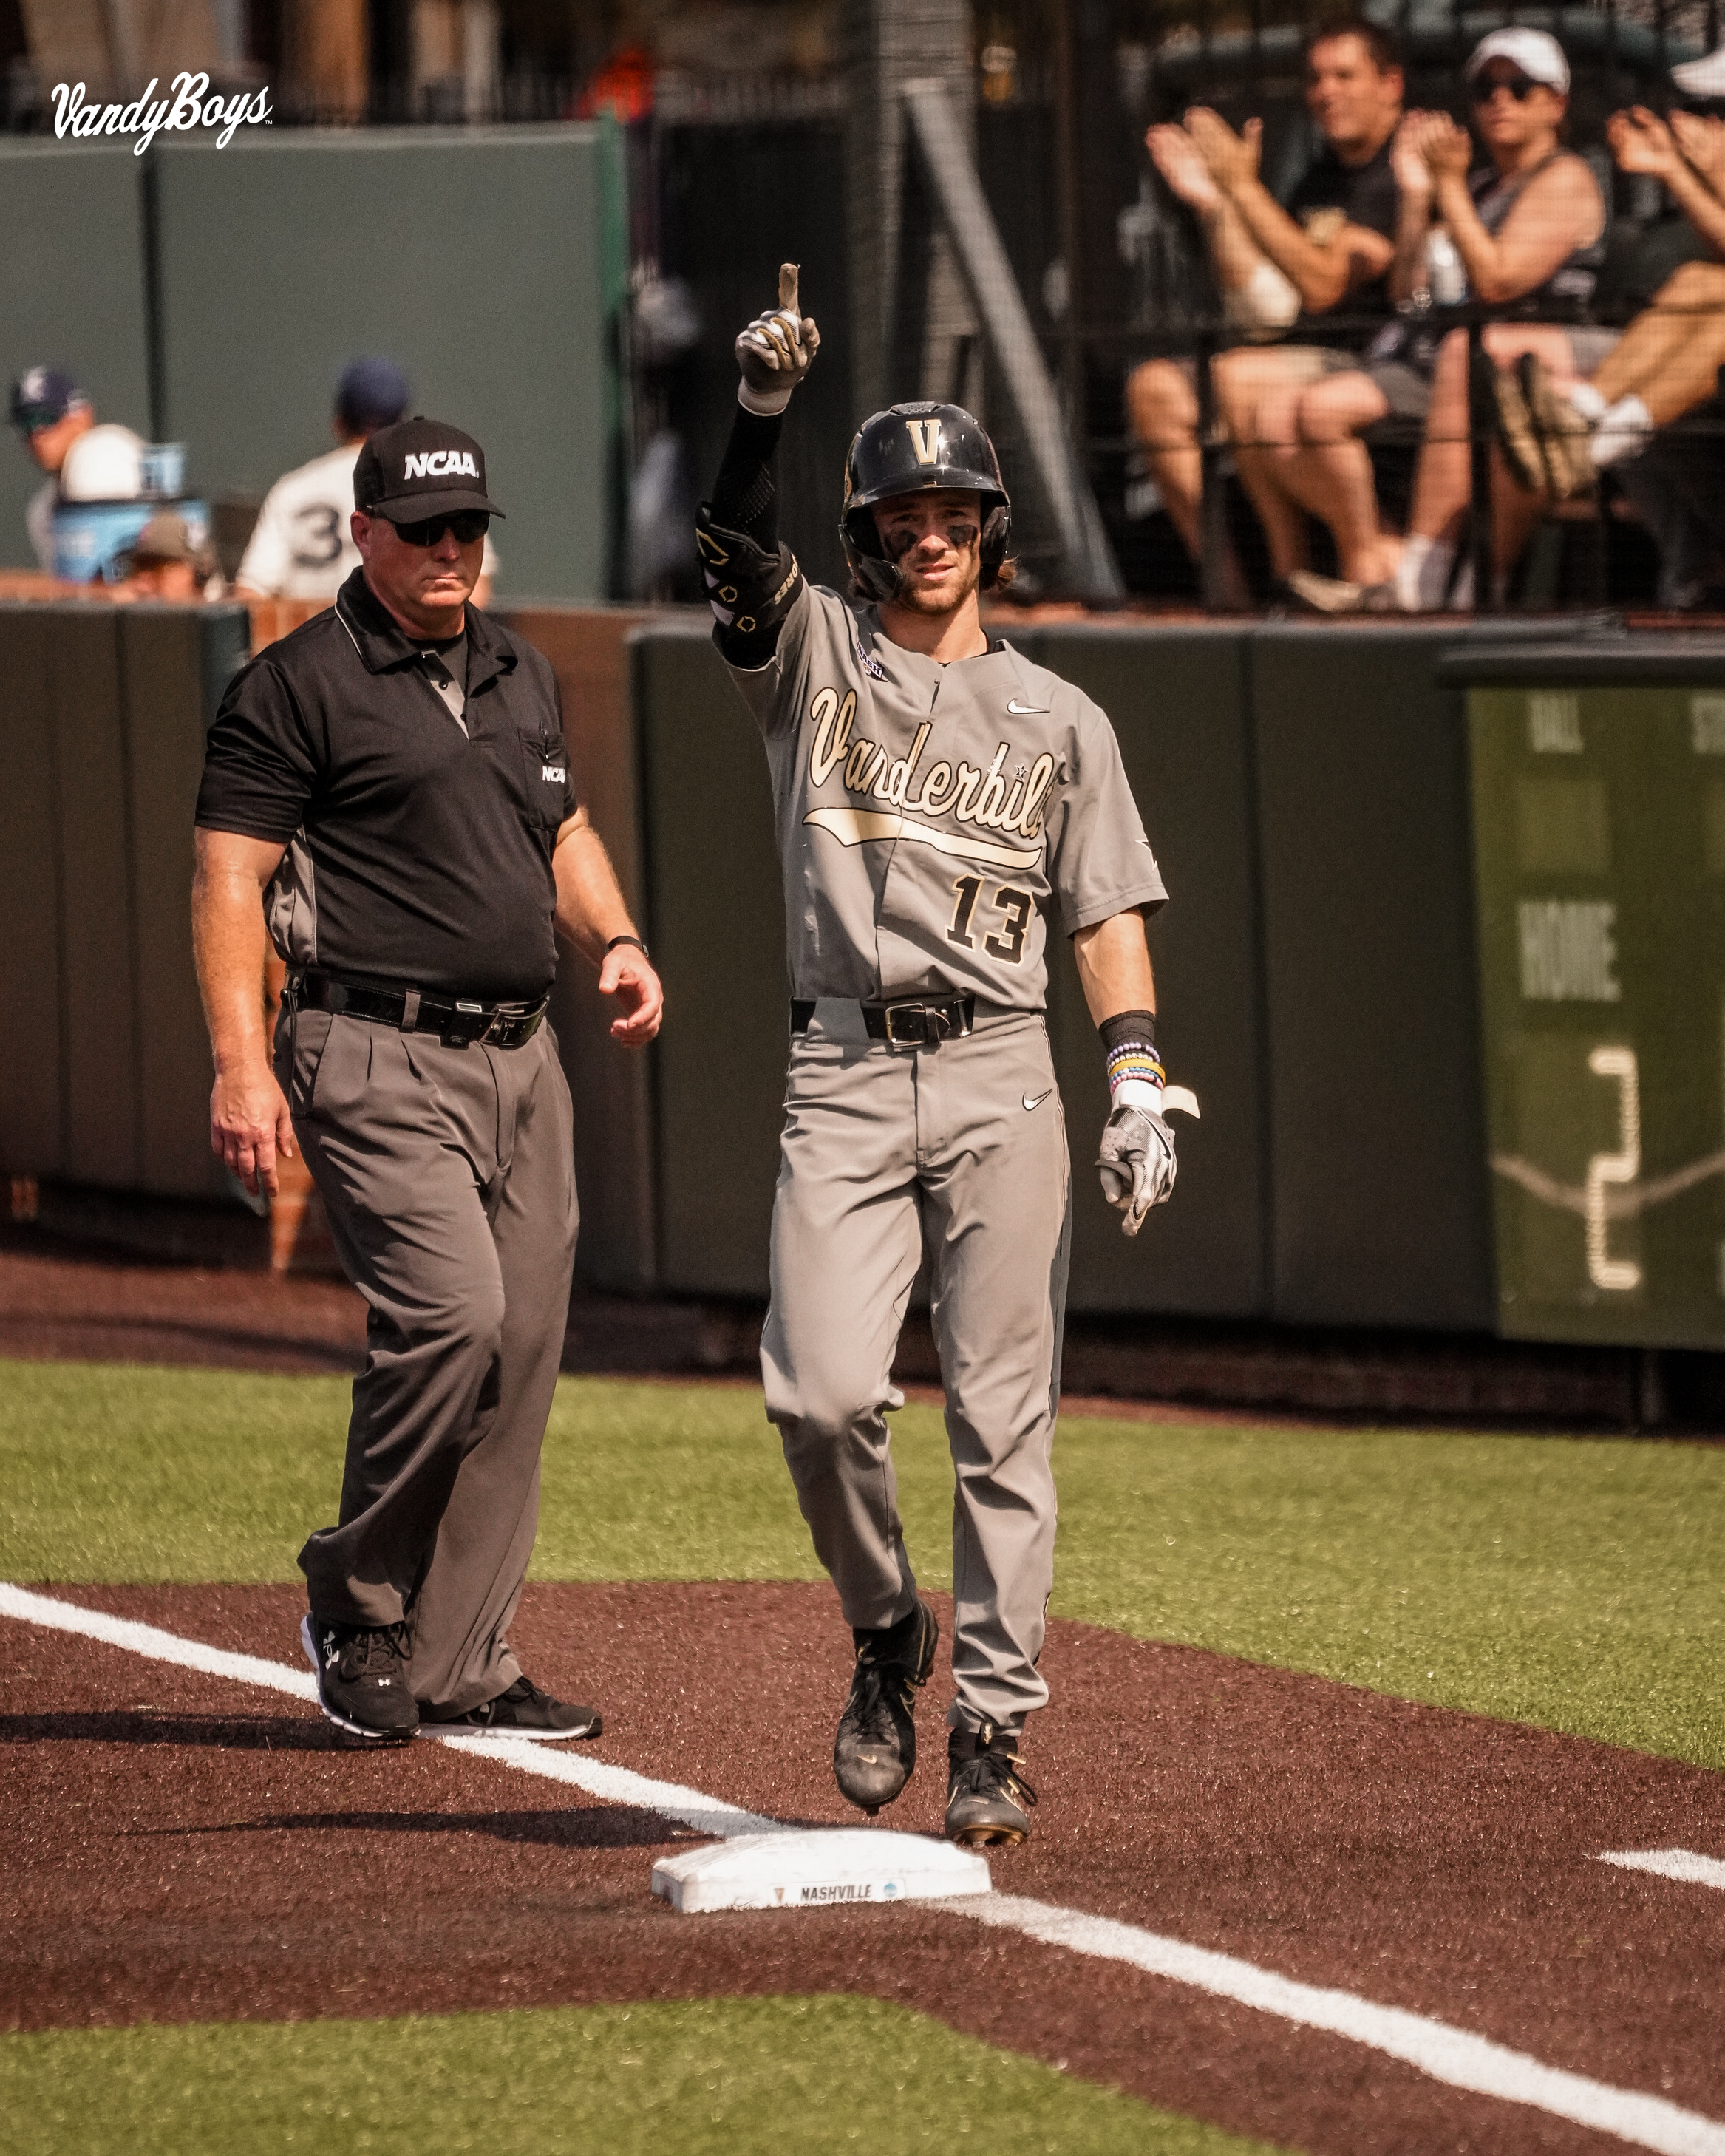 Vanderbilt Baseball on X: Heading to the ninth trailing by one